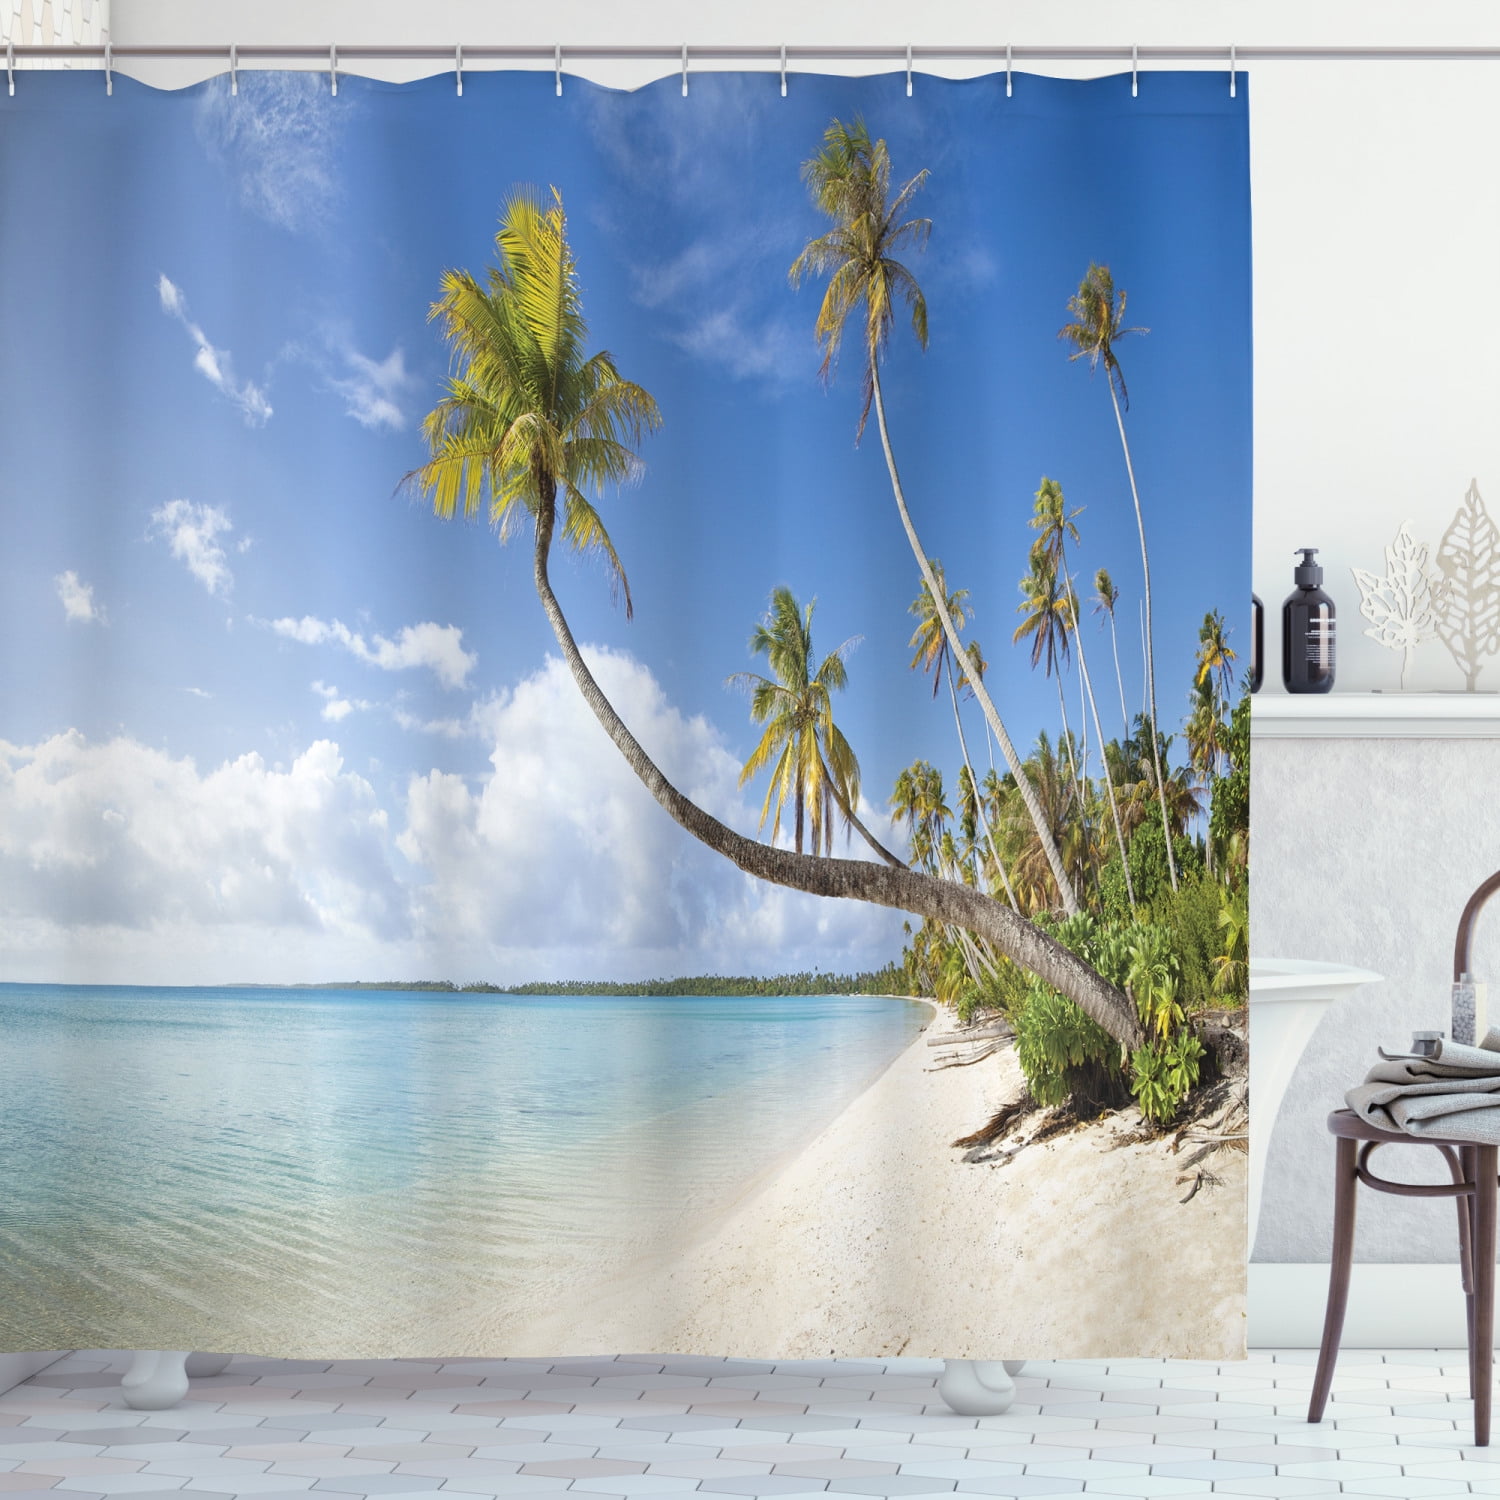 Details about   Tropical Tour Bus Surfboard Palm Leaves Shower Curtain Set for Bathroom Decor 